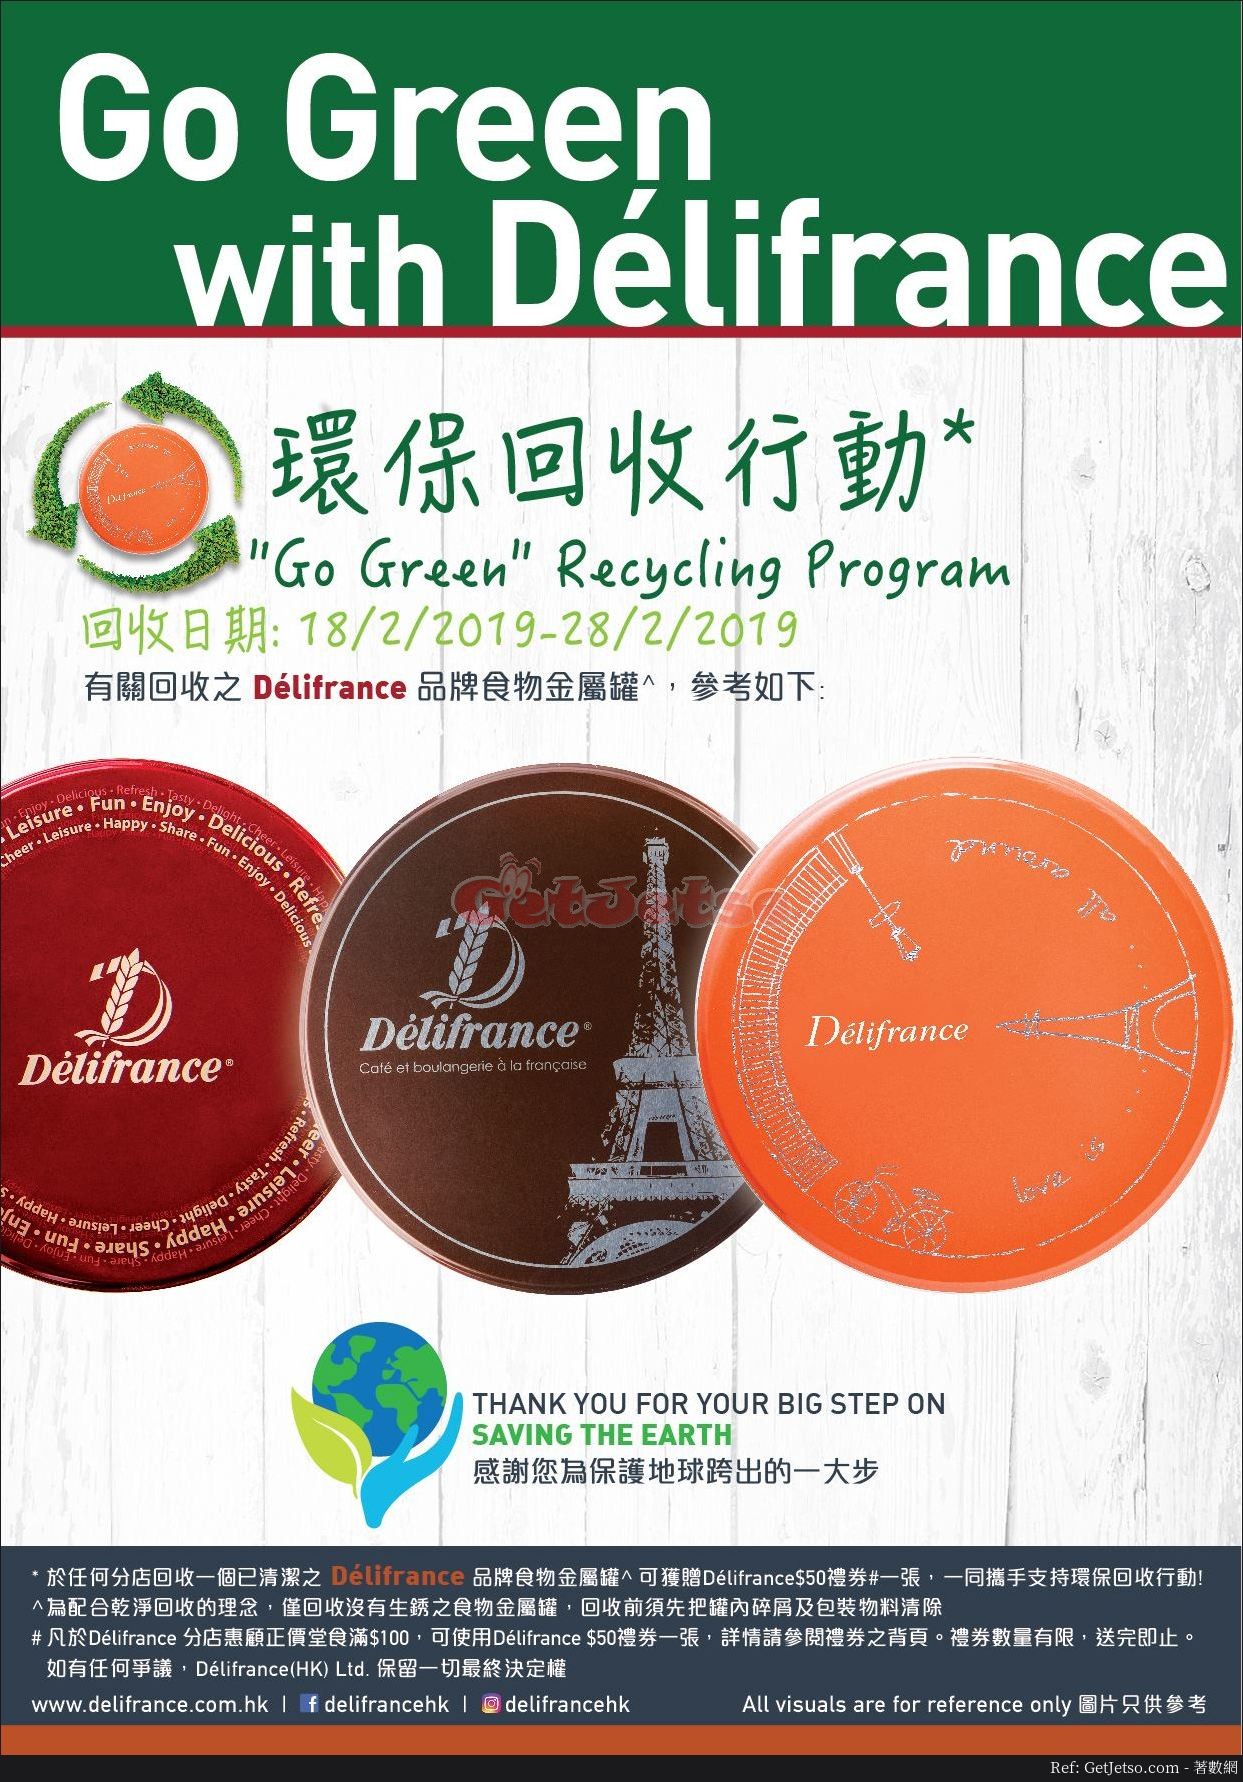 Délifrance 回收金屬罐送禮券優惠(至19年2月28日)圖片1